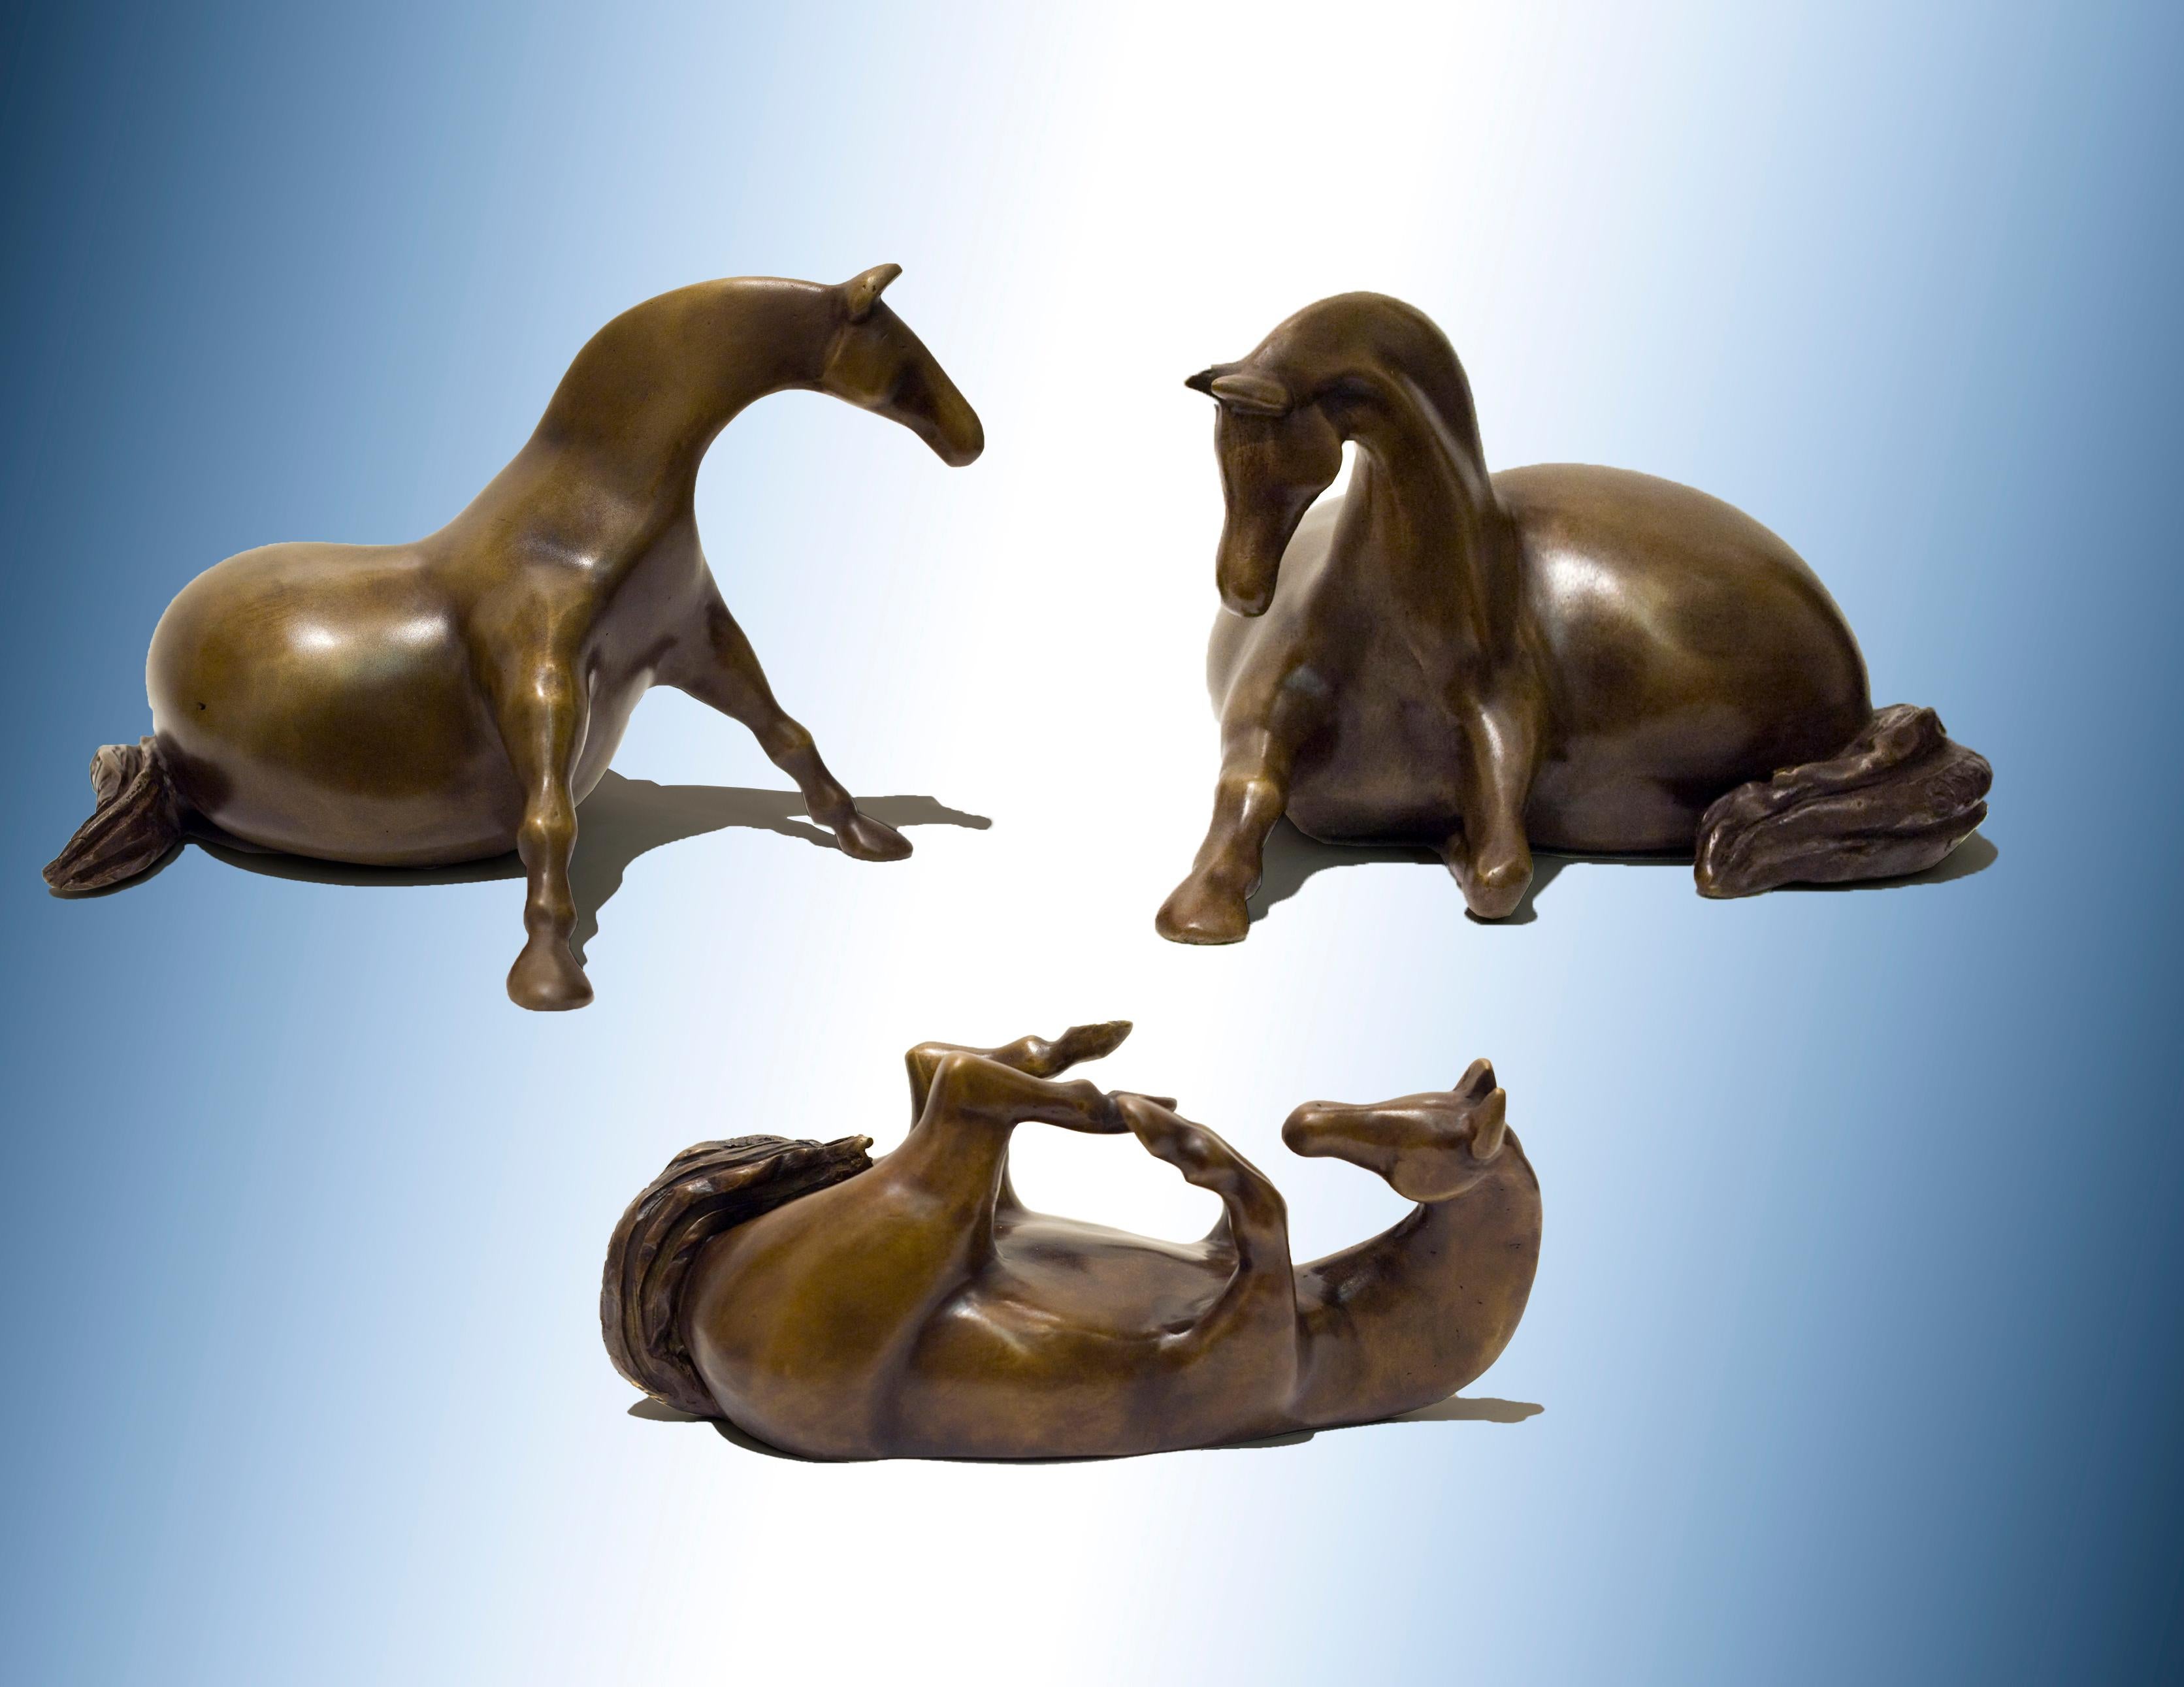 Gisela Pferdekamper Figurative Sculpture - Horses: At Attention, At Play, At Rest  (set)